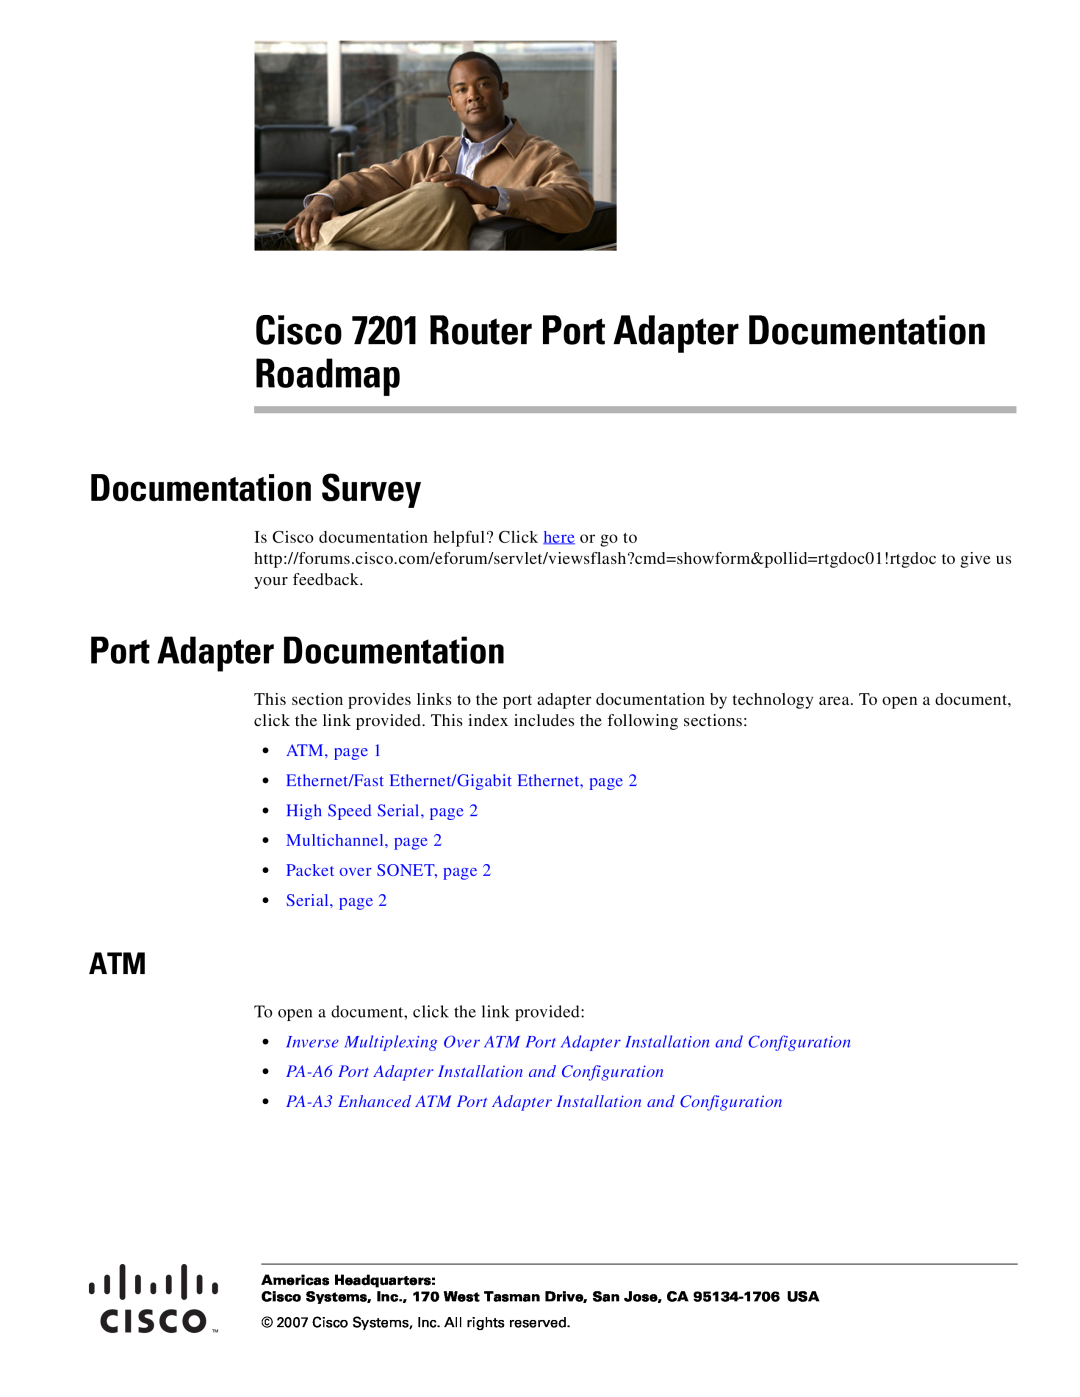 Cisco Systems 7201 manual Documentation Survey, Port Adapter Documentation, Serial, page 